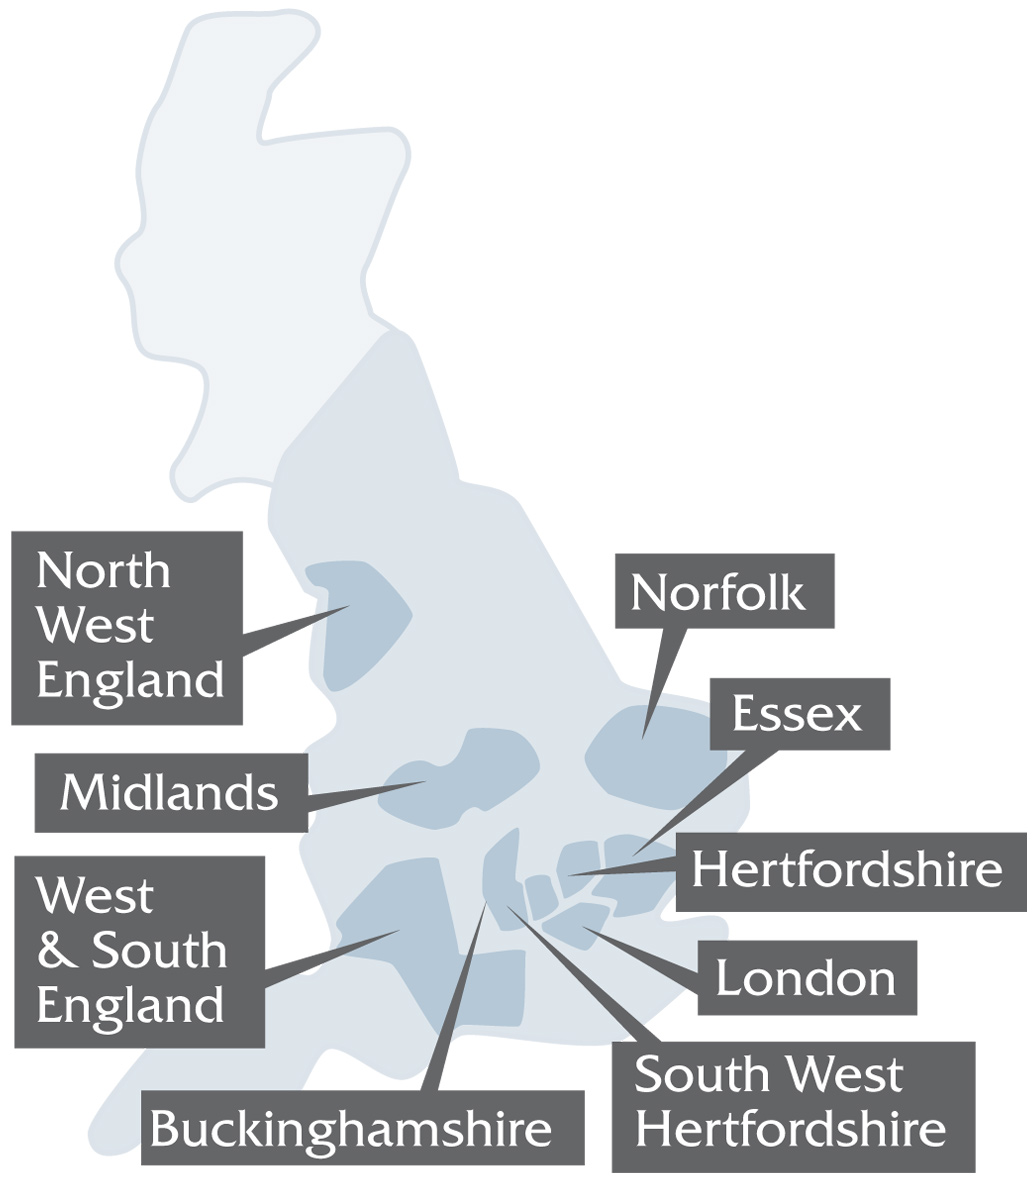 English Music Aptitude Test secondary transfer areas. South West Hertfordshire, London, Hertfordshire, West & South England, Essex, North West England, Midlands, Norfolk, Buckinghamshire.